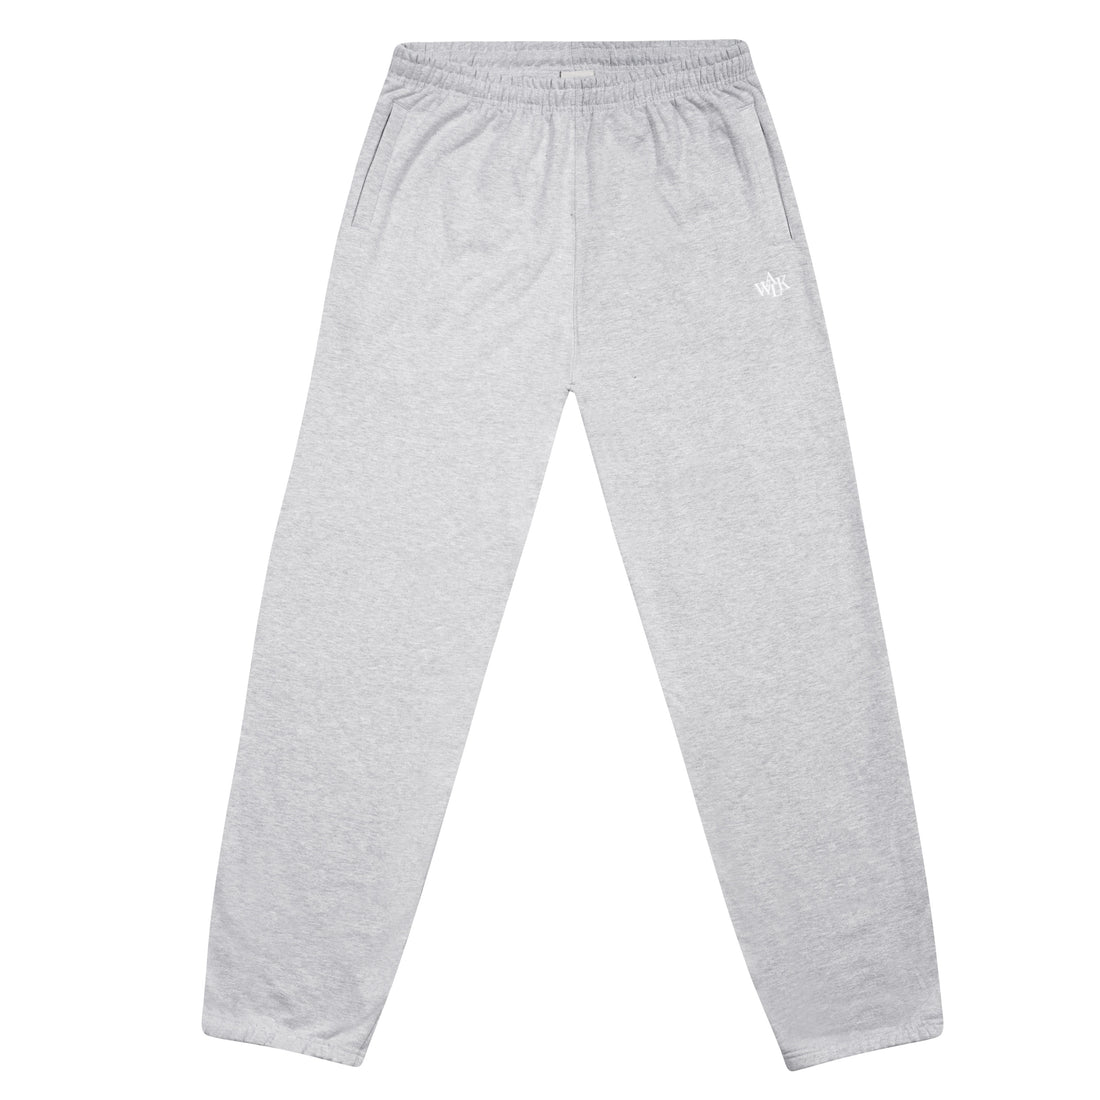 The grey jogging pants